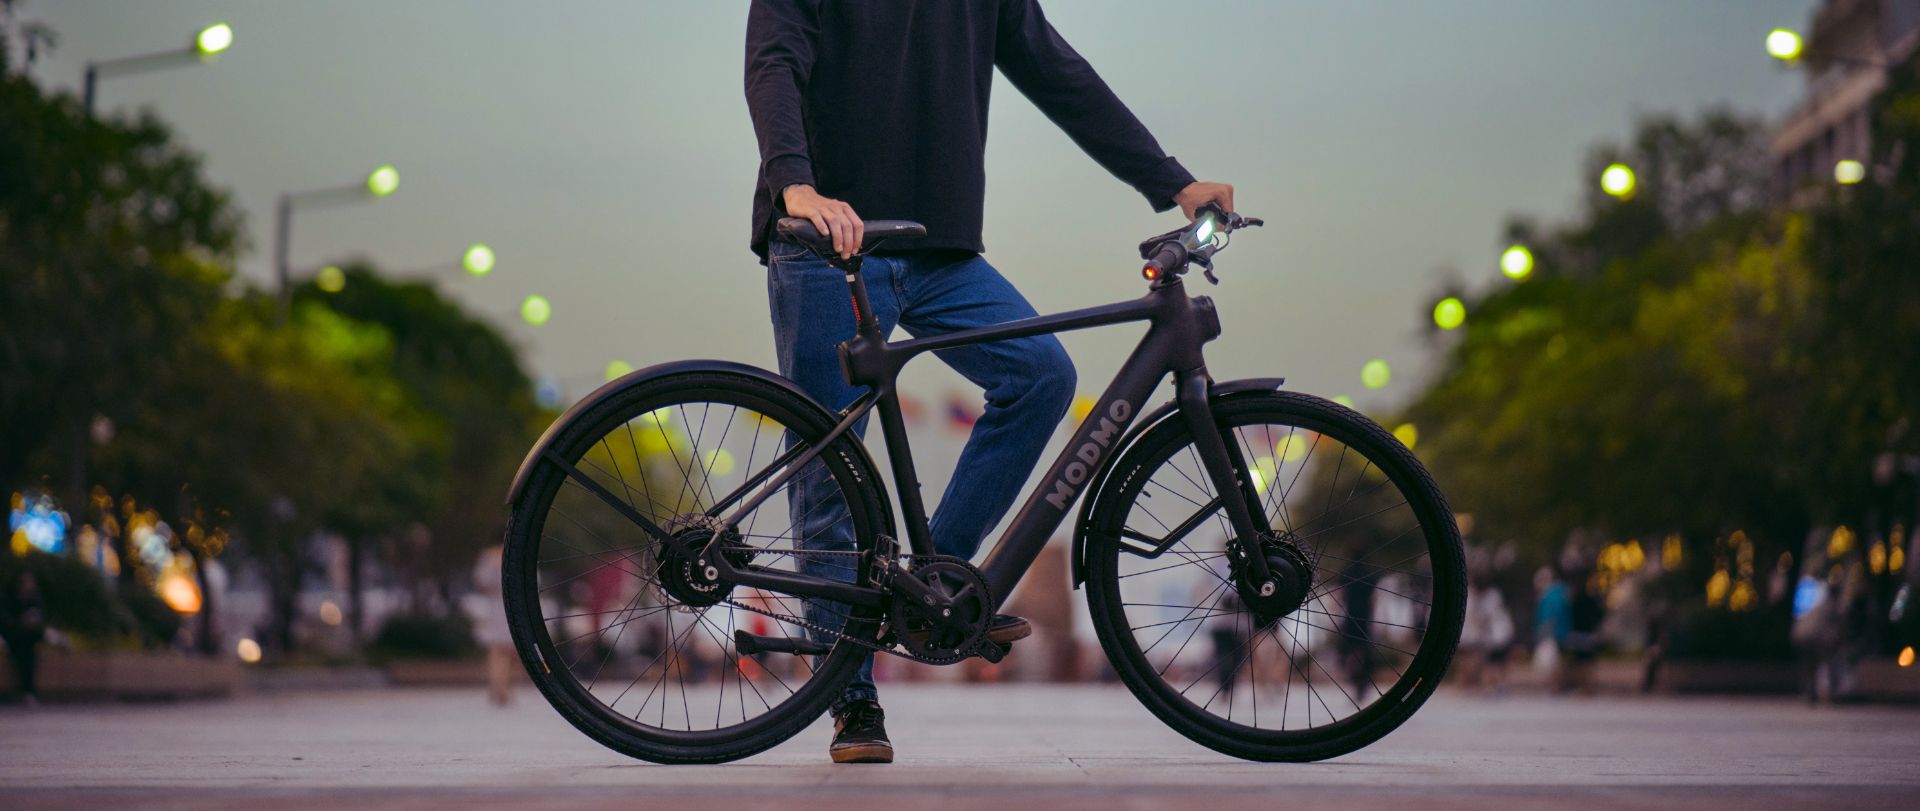 Modmo Saigon+ Electric Bicycle - RRP £2800 - Size M (Rider: 140-155cm) - Image 14 of 19